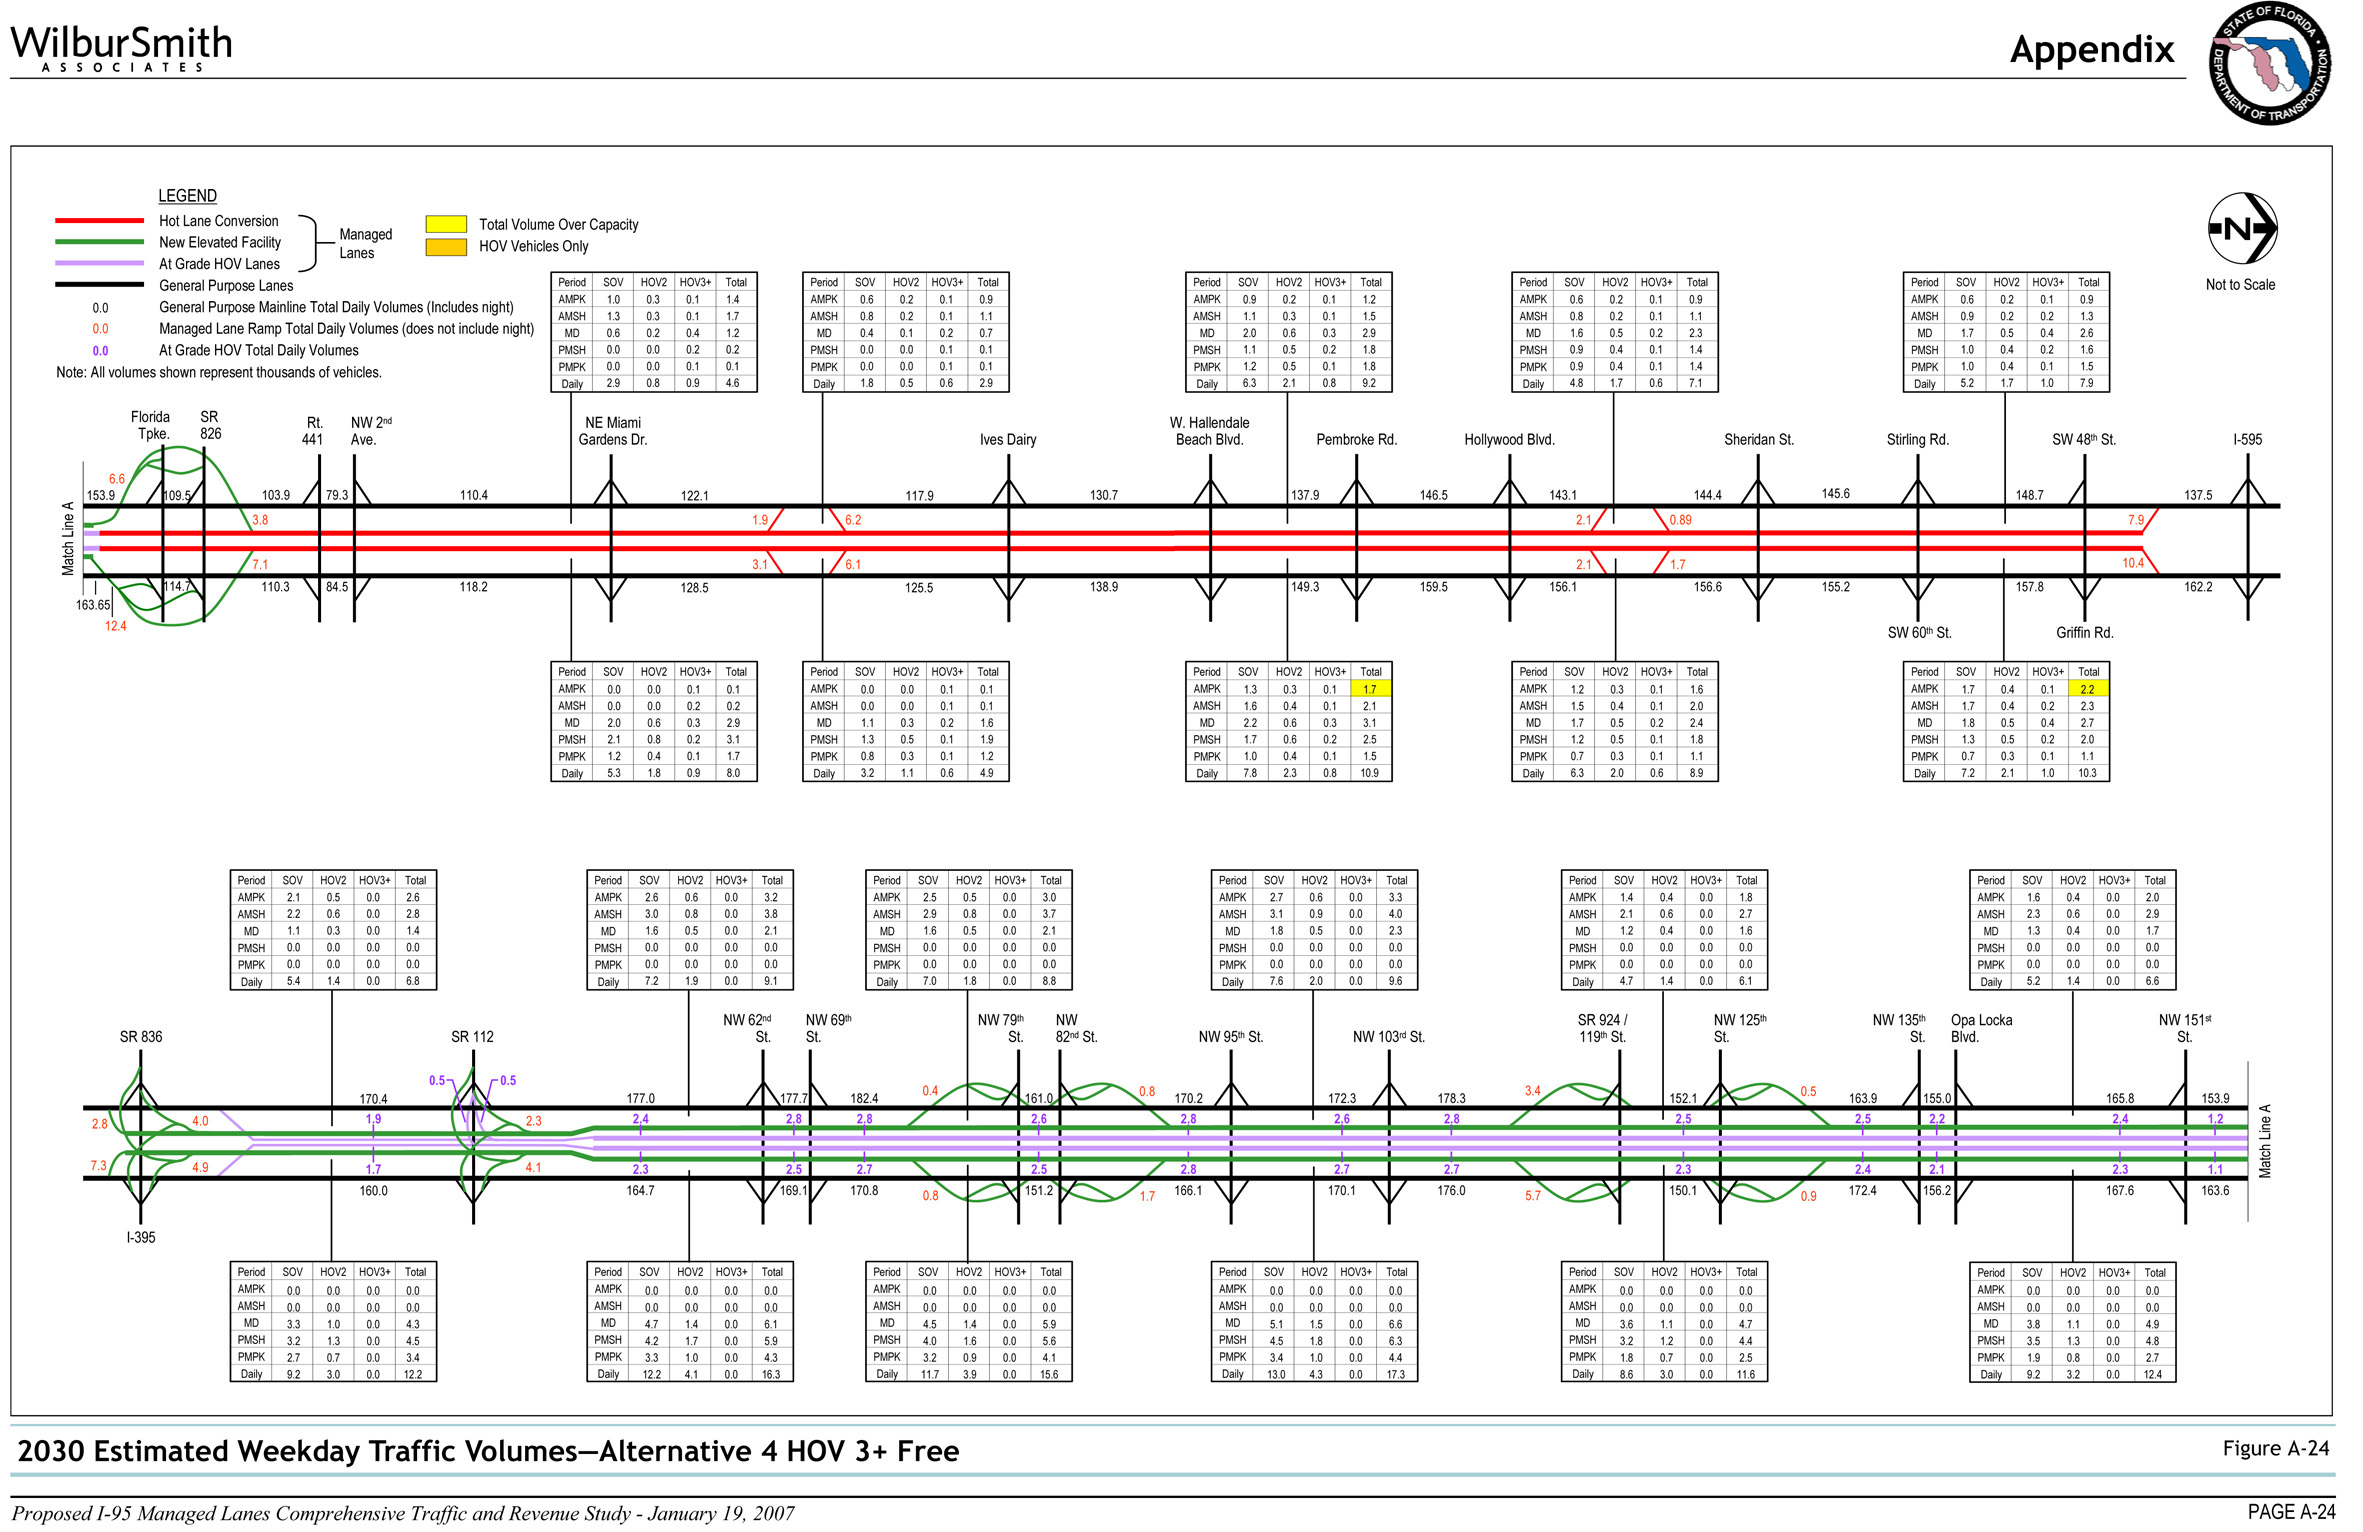 Figure A-24 2030 Estimated Weekday Traffic Volumes - Alternative 4 HOV 3+ Free